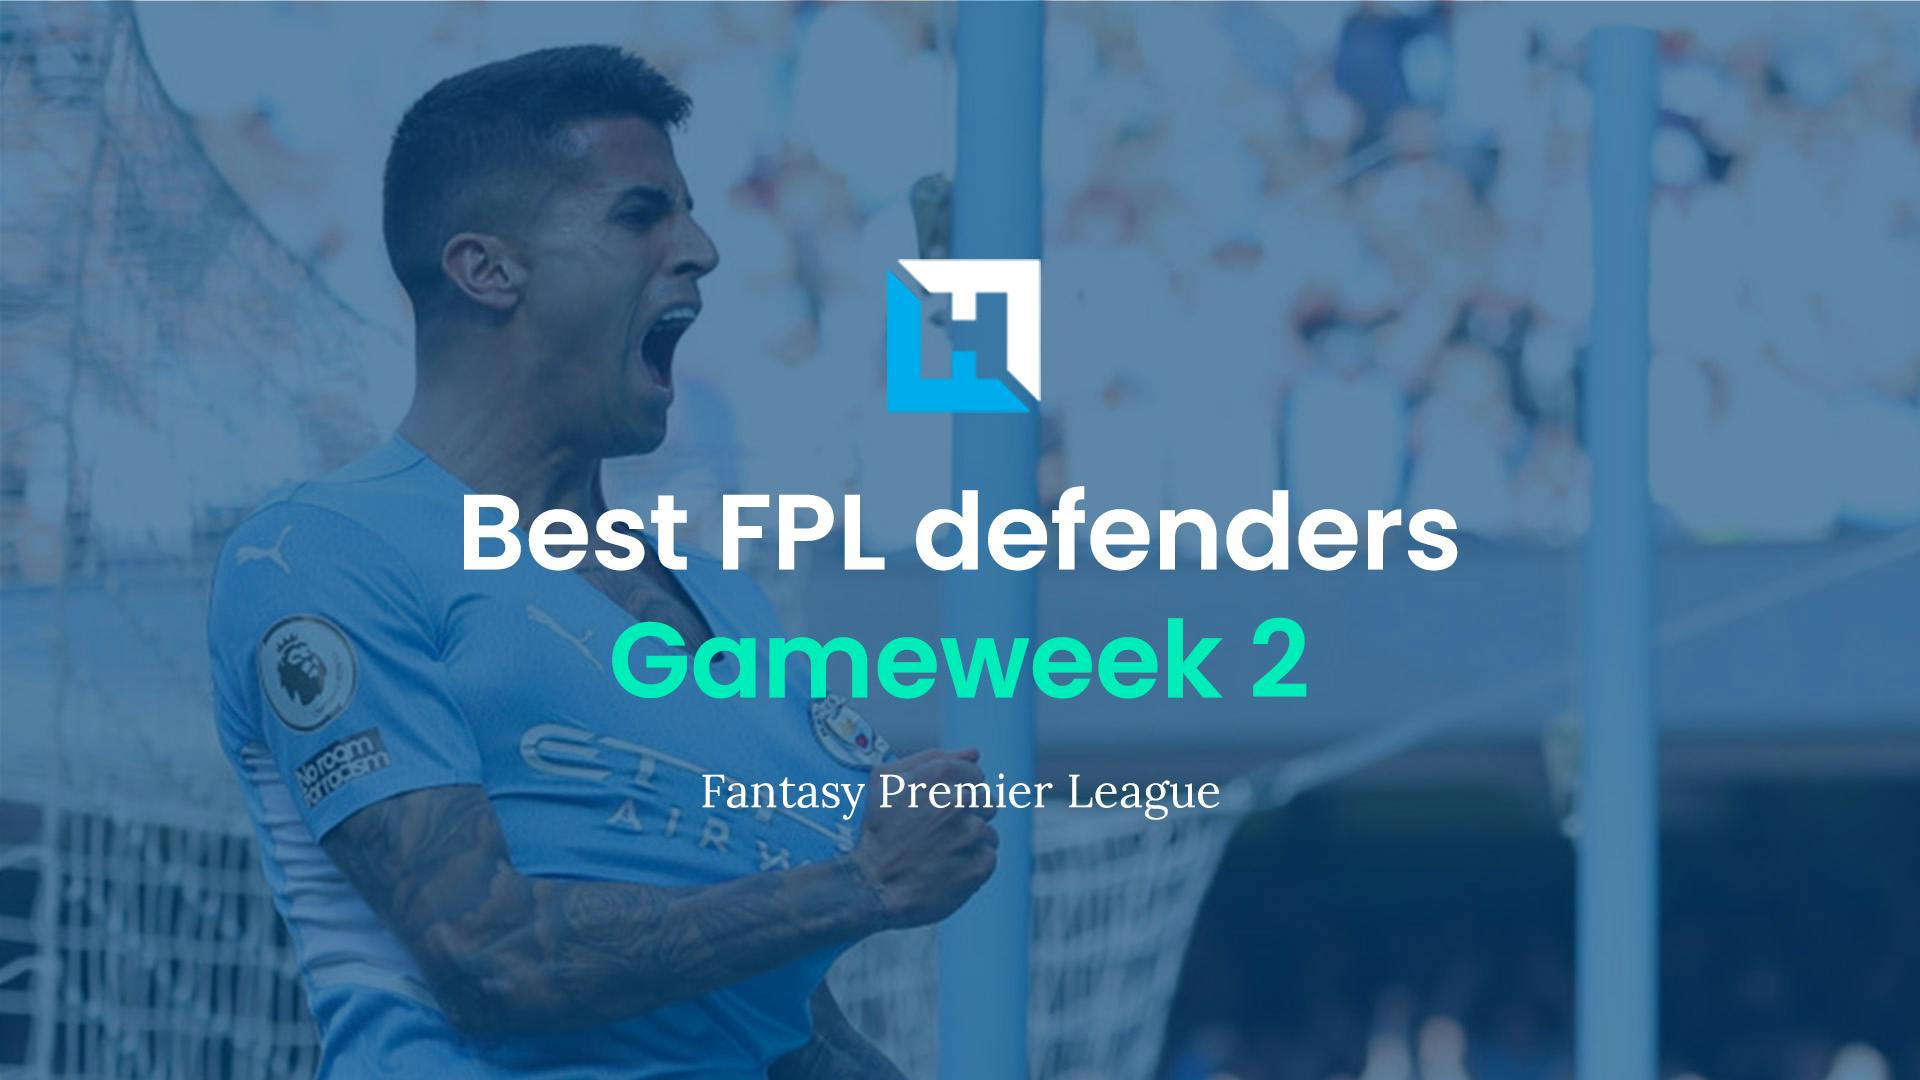 Best FPL players for Gameweek 2: Top 5 best defenders